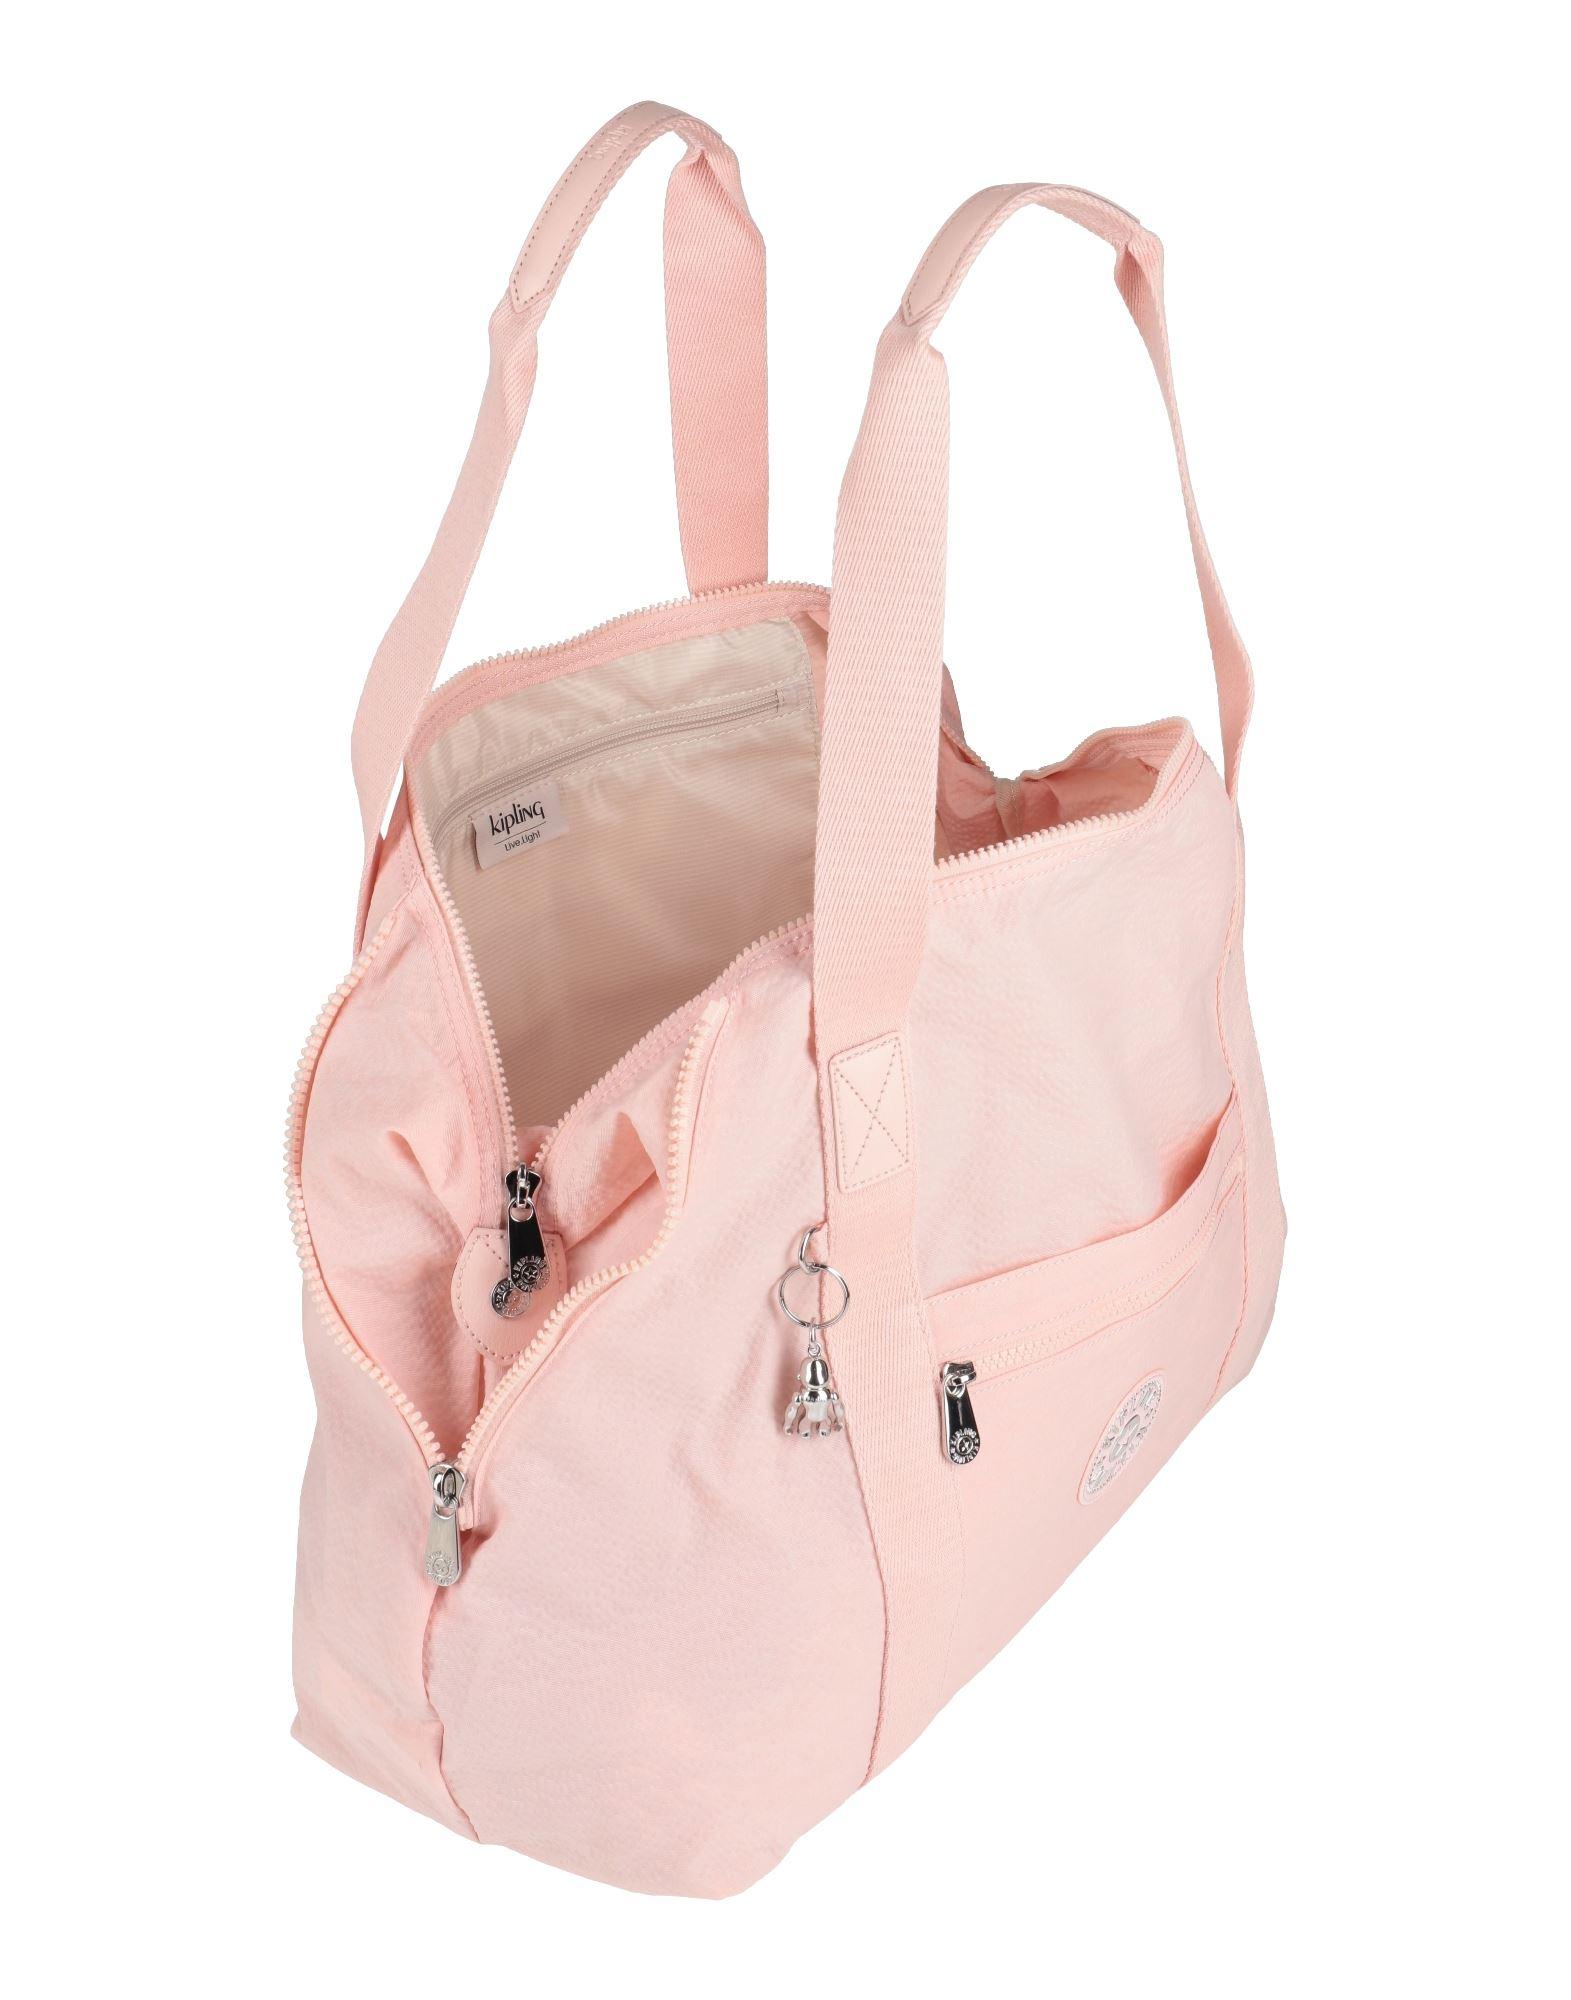 Amazon.com: Kipling: Handbags